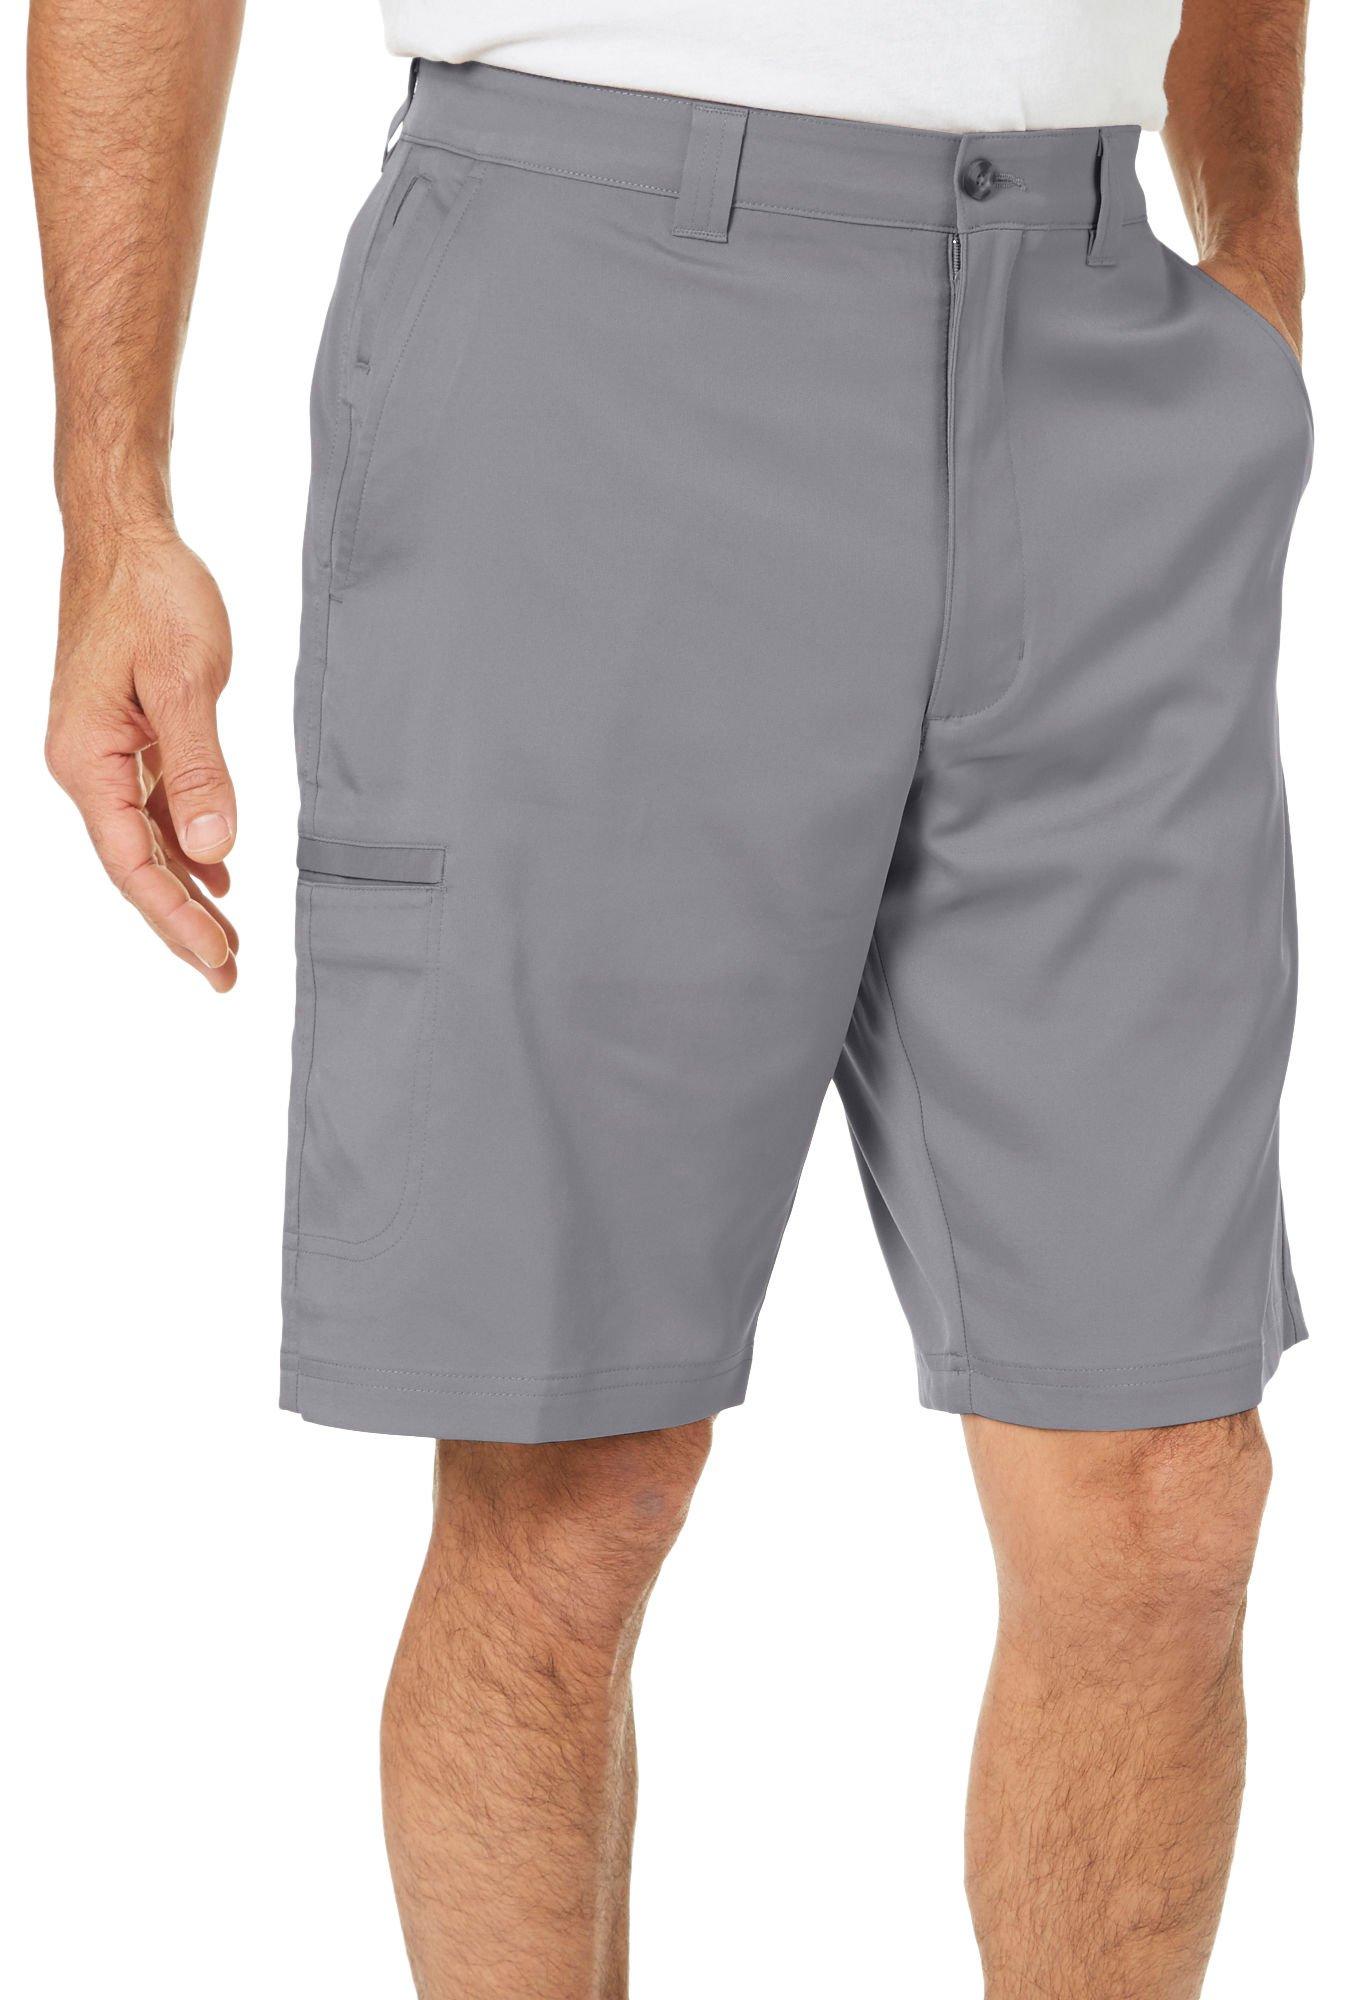 under armour cargo golf shorts